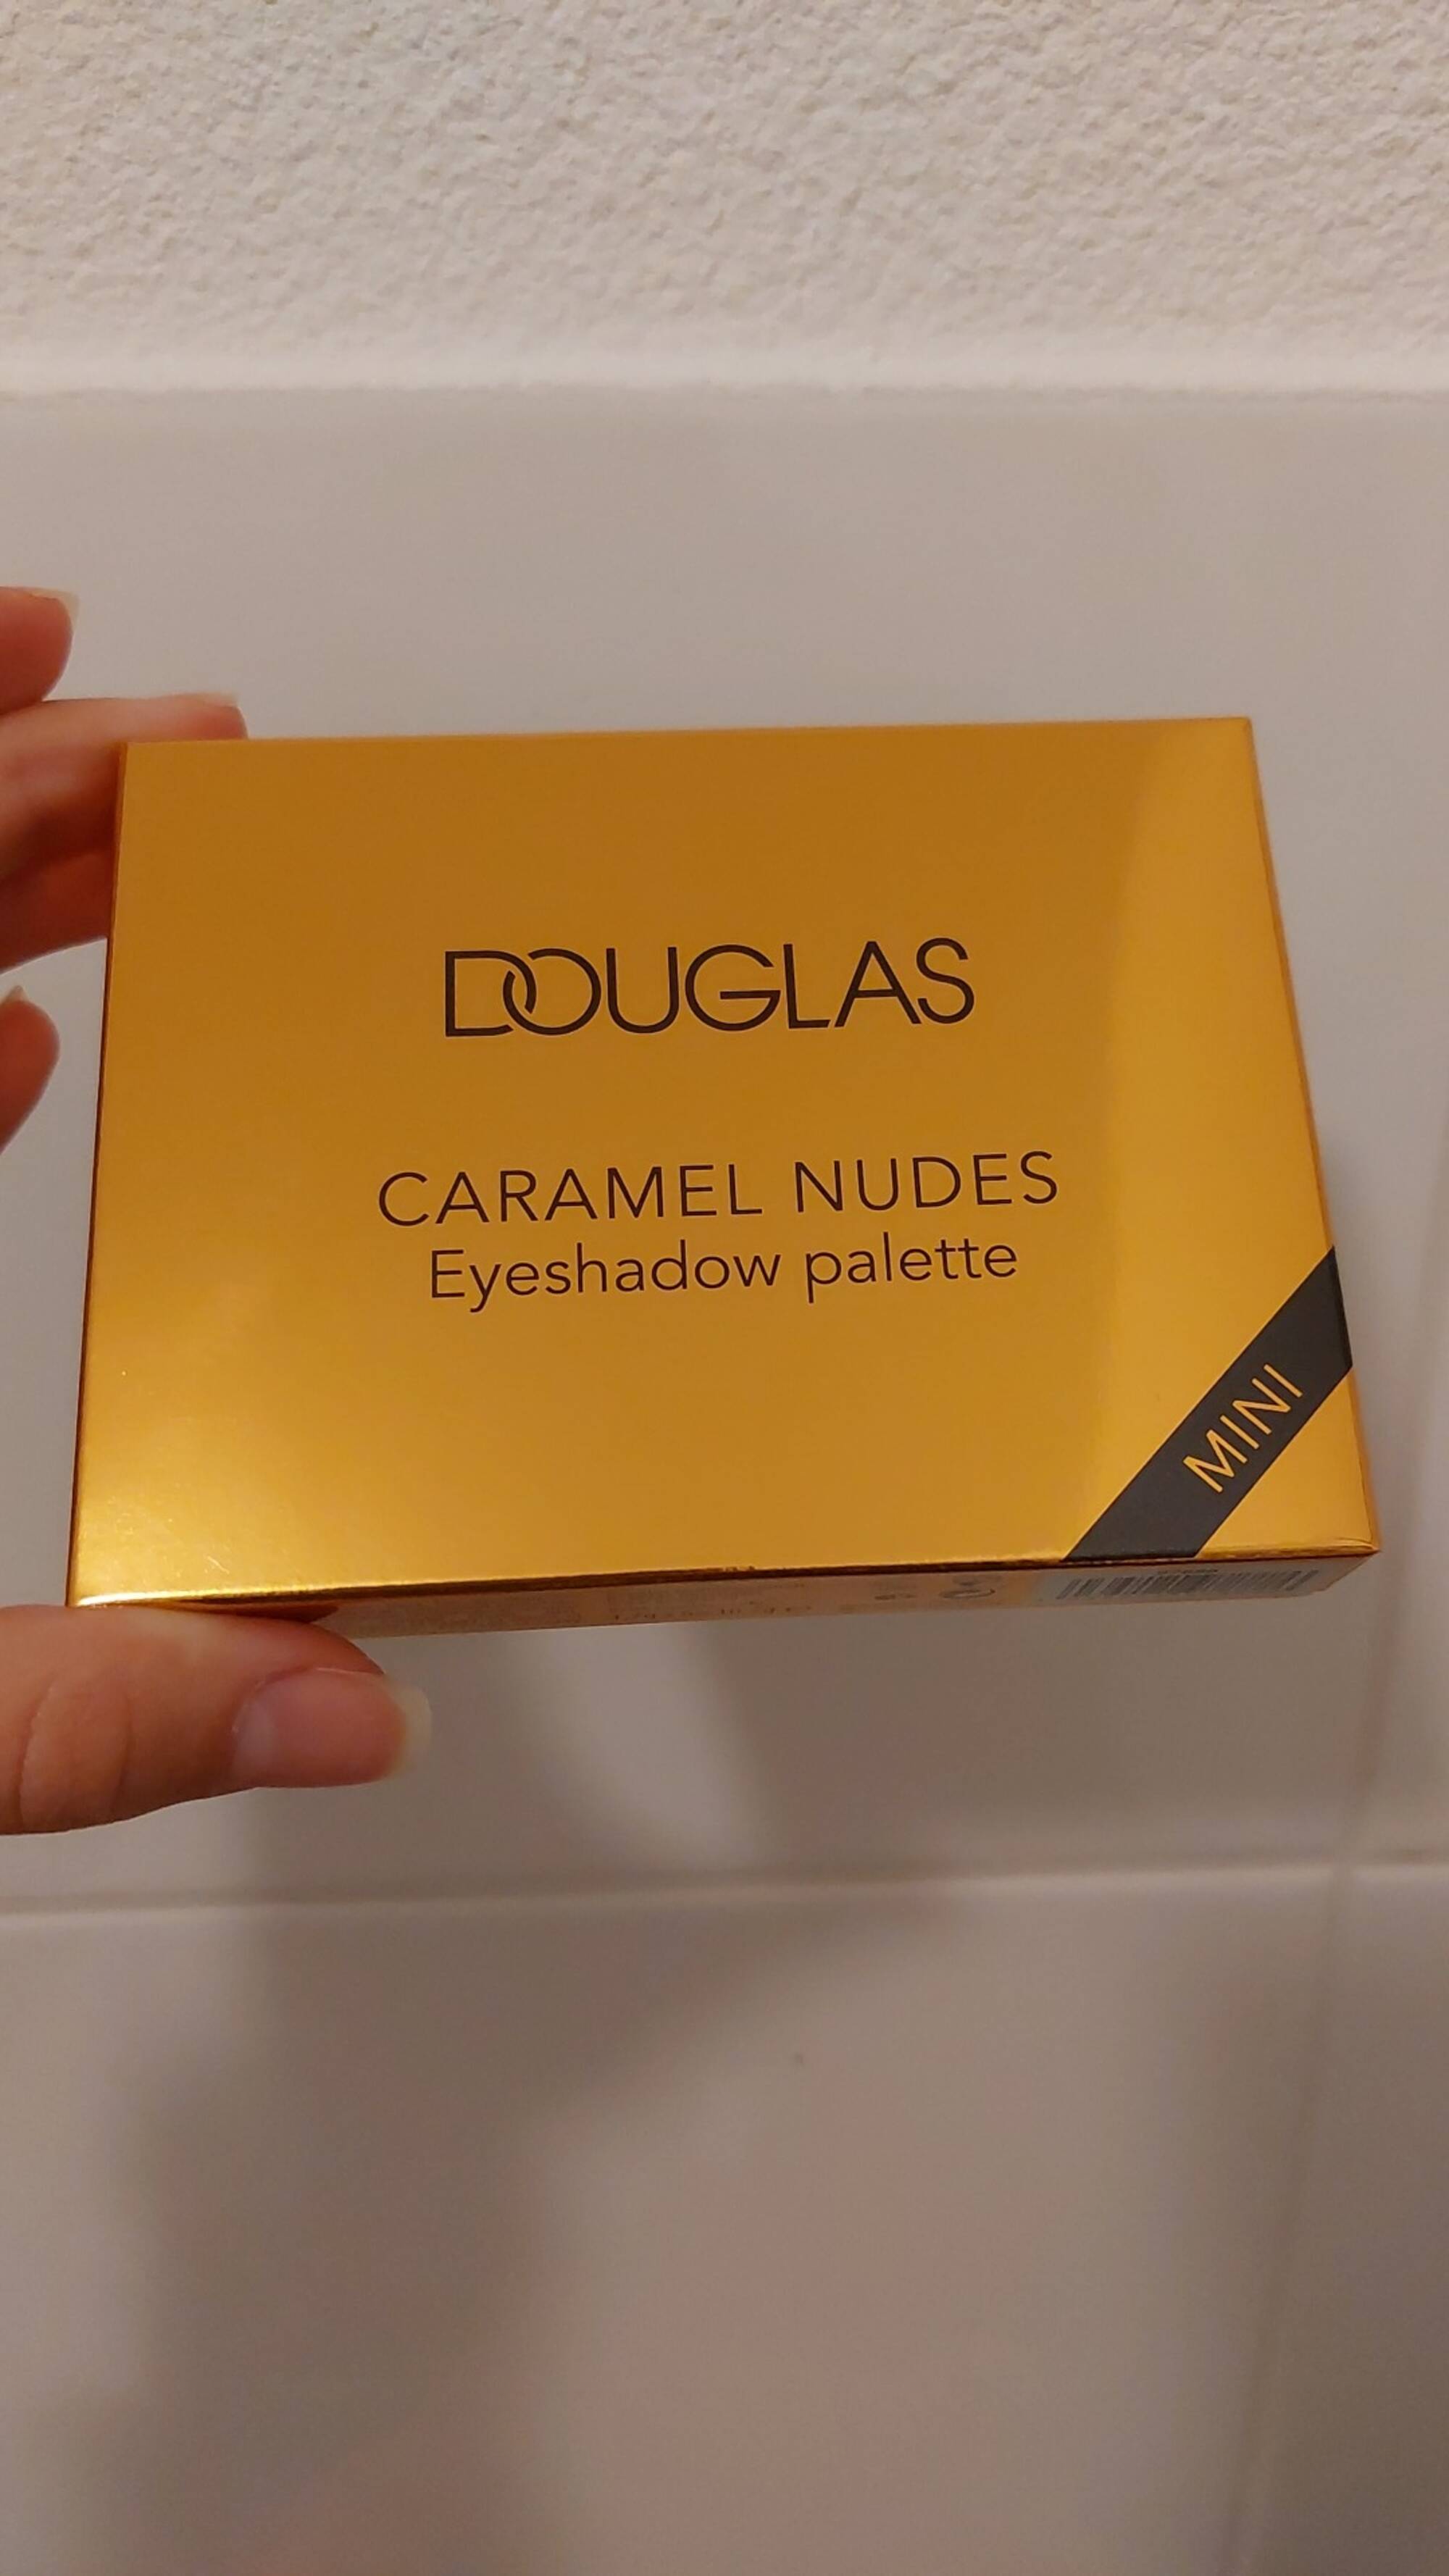 DOUGLAS - Caramel nudes - Eyeshadow palette mini